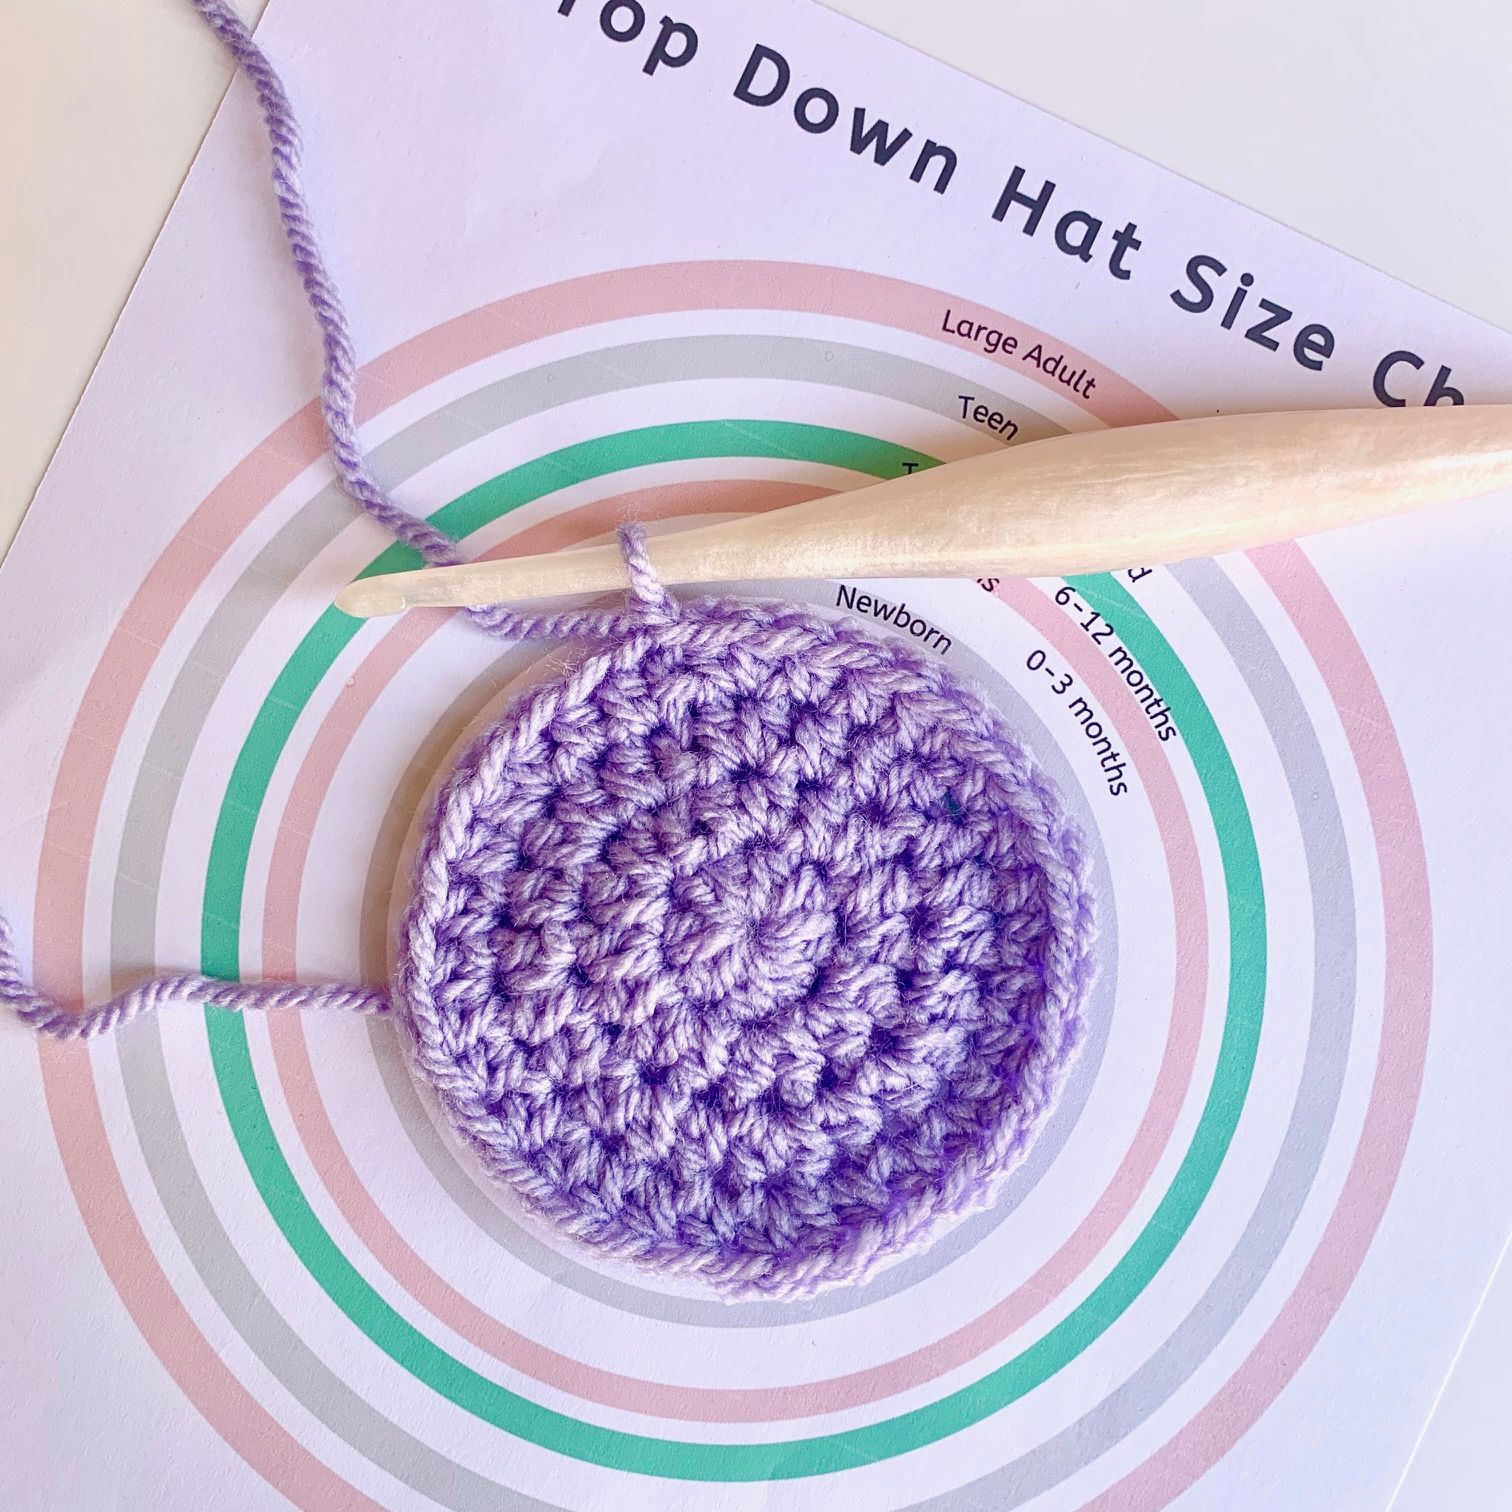 Crochet Hat Size Chart by Age - CrochetNCrafts